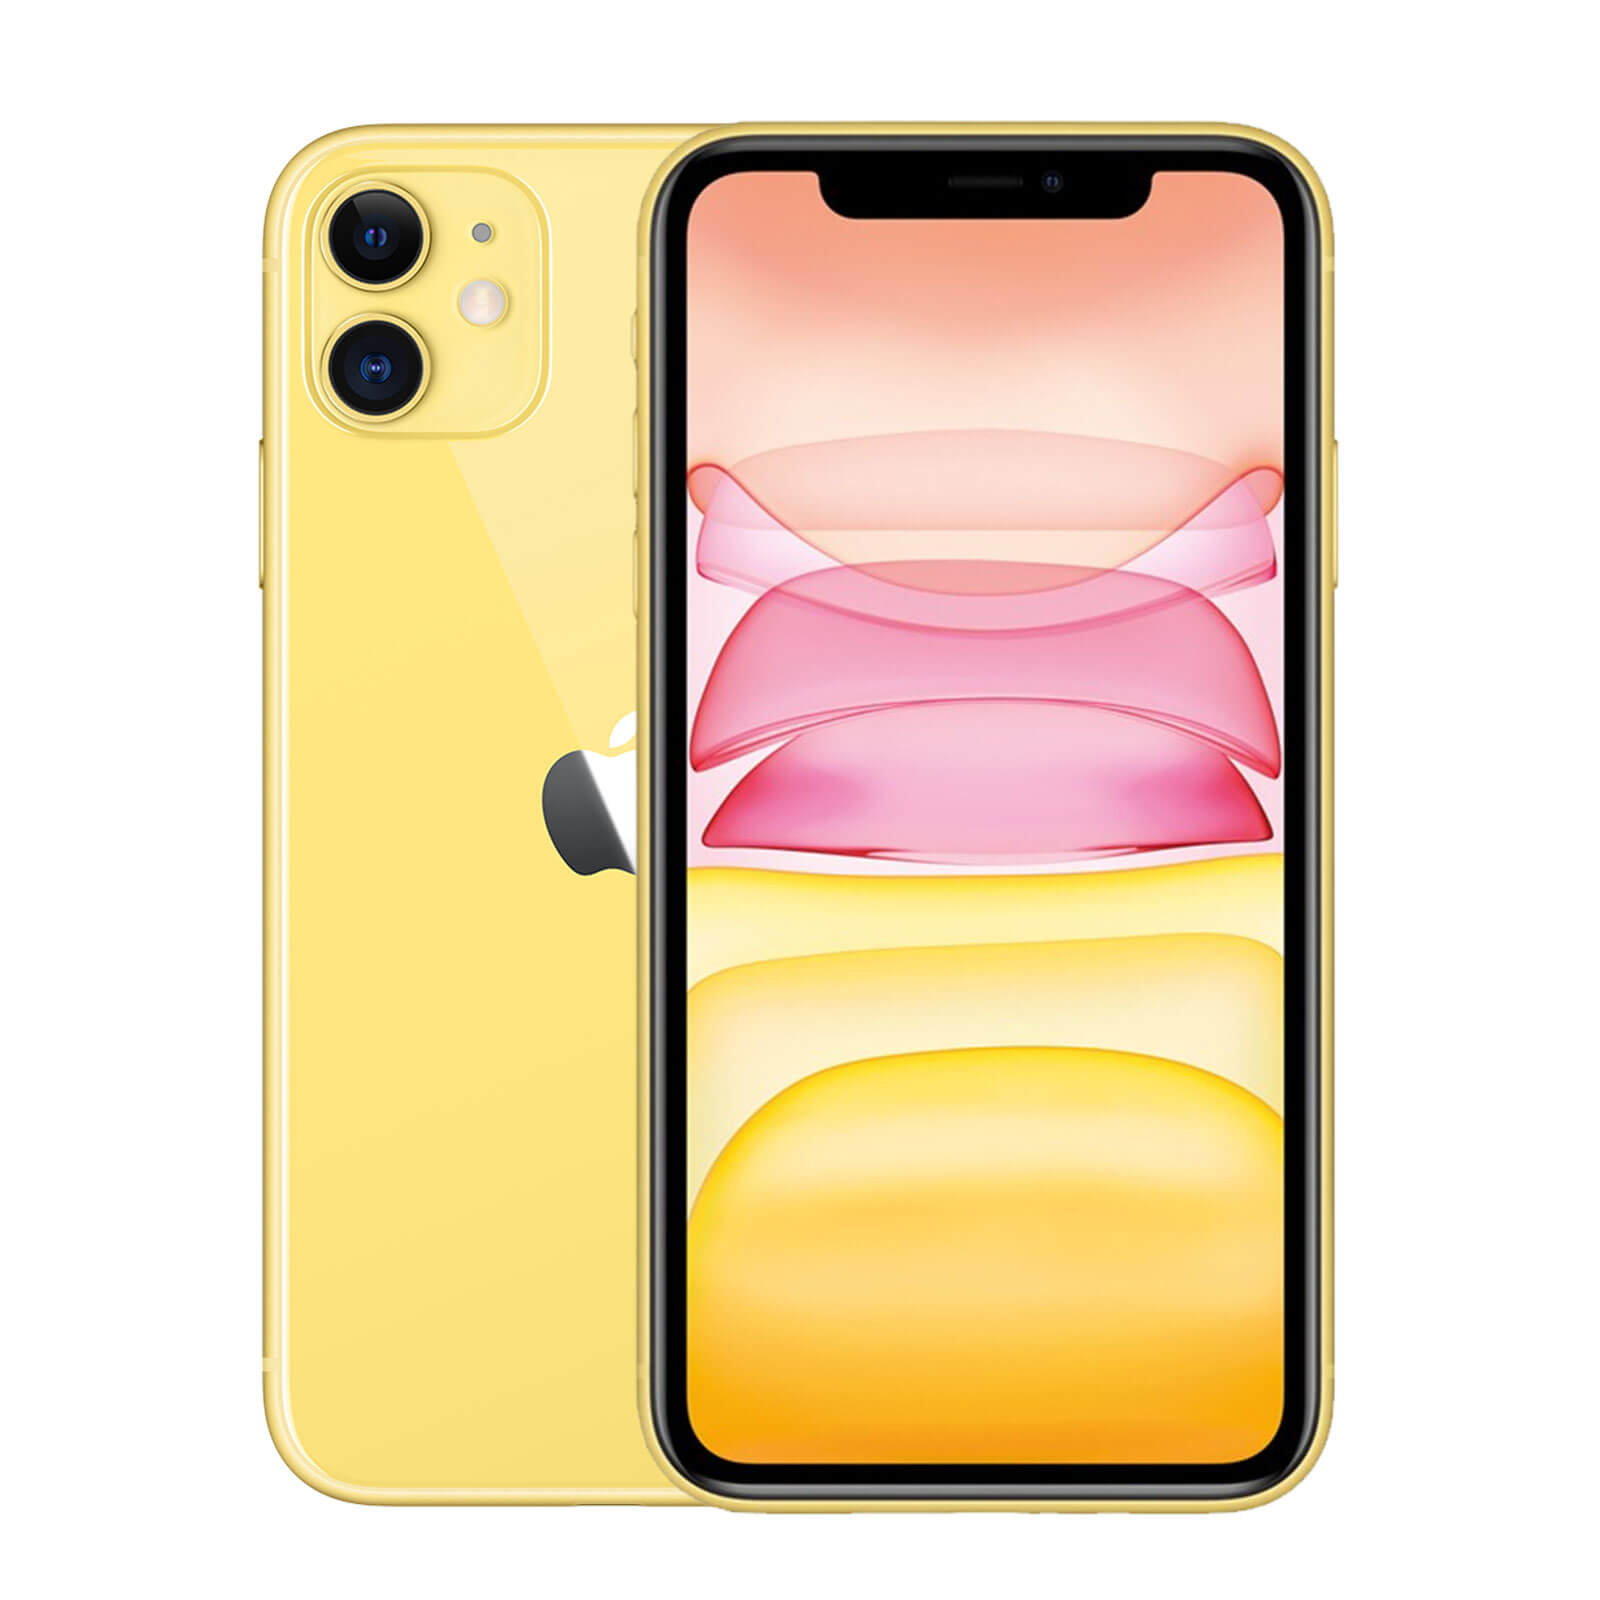 Apple iPhone 11 256GB Yellow Good - Sprint